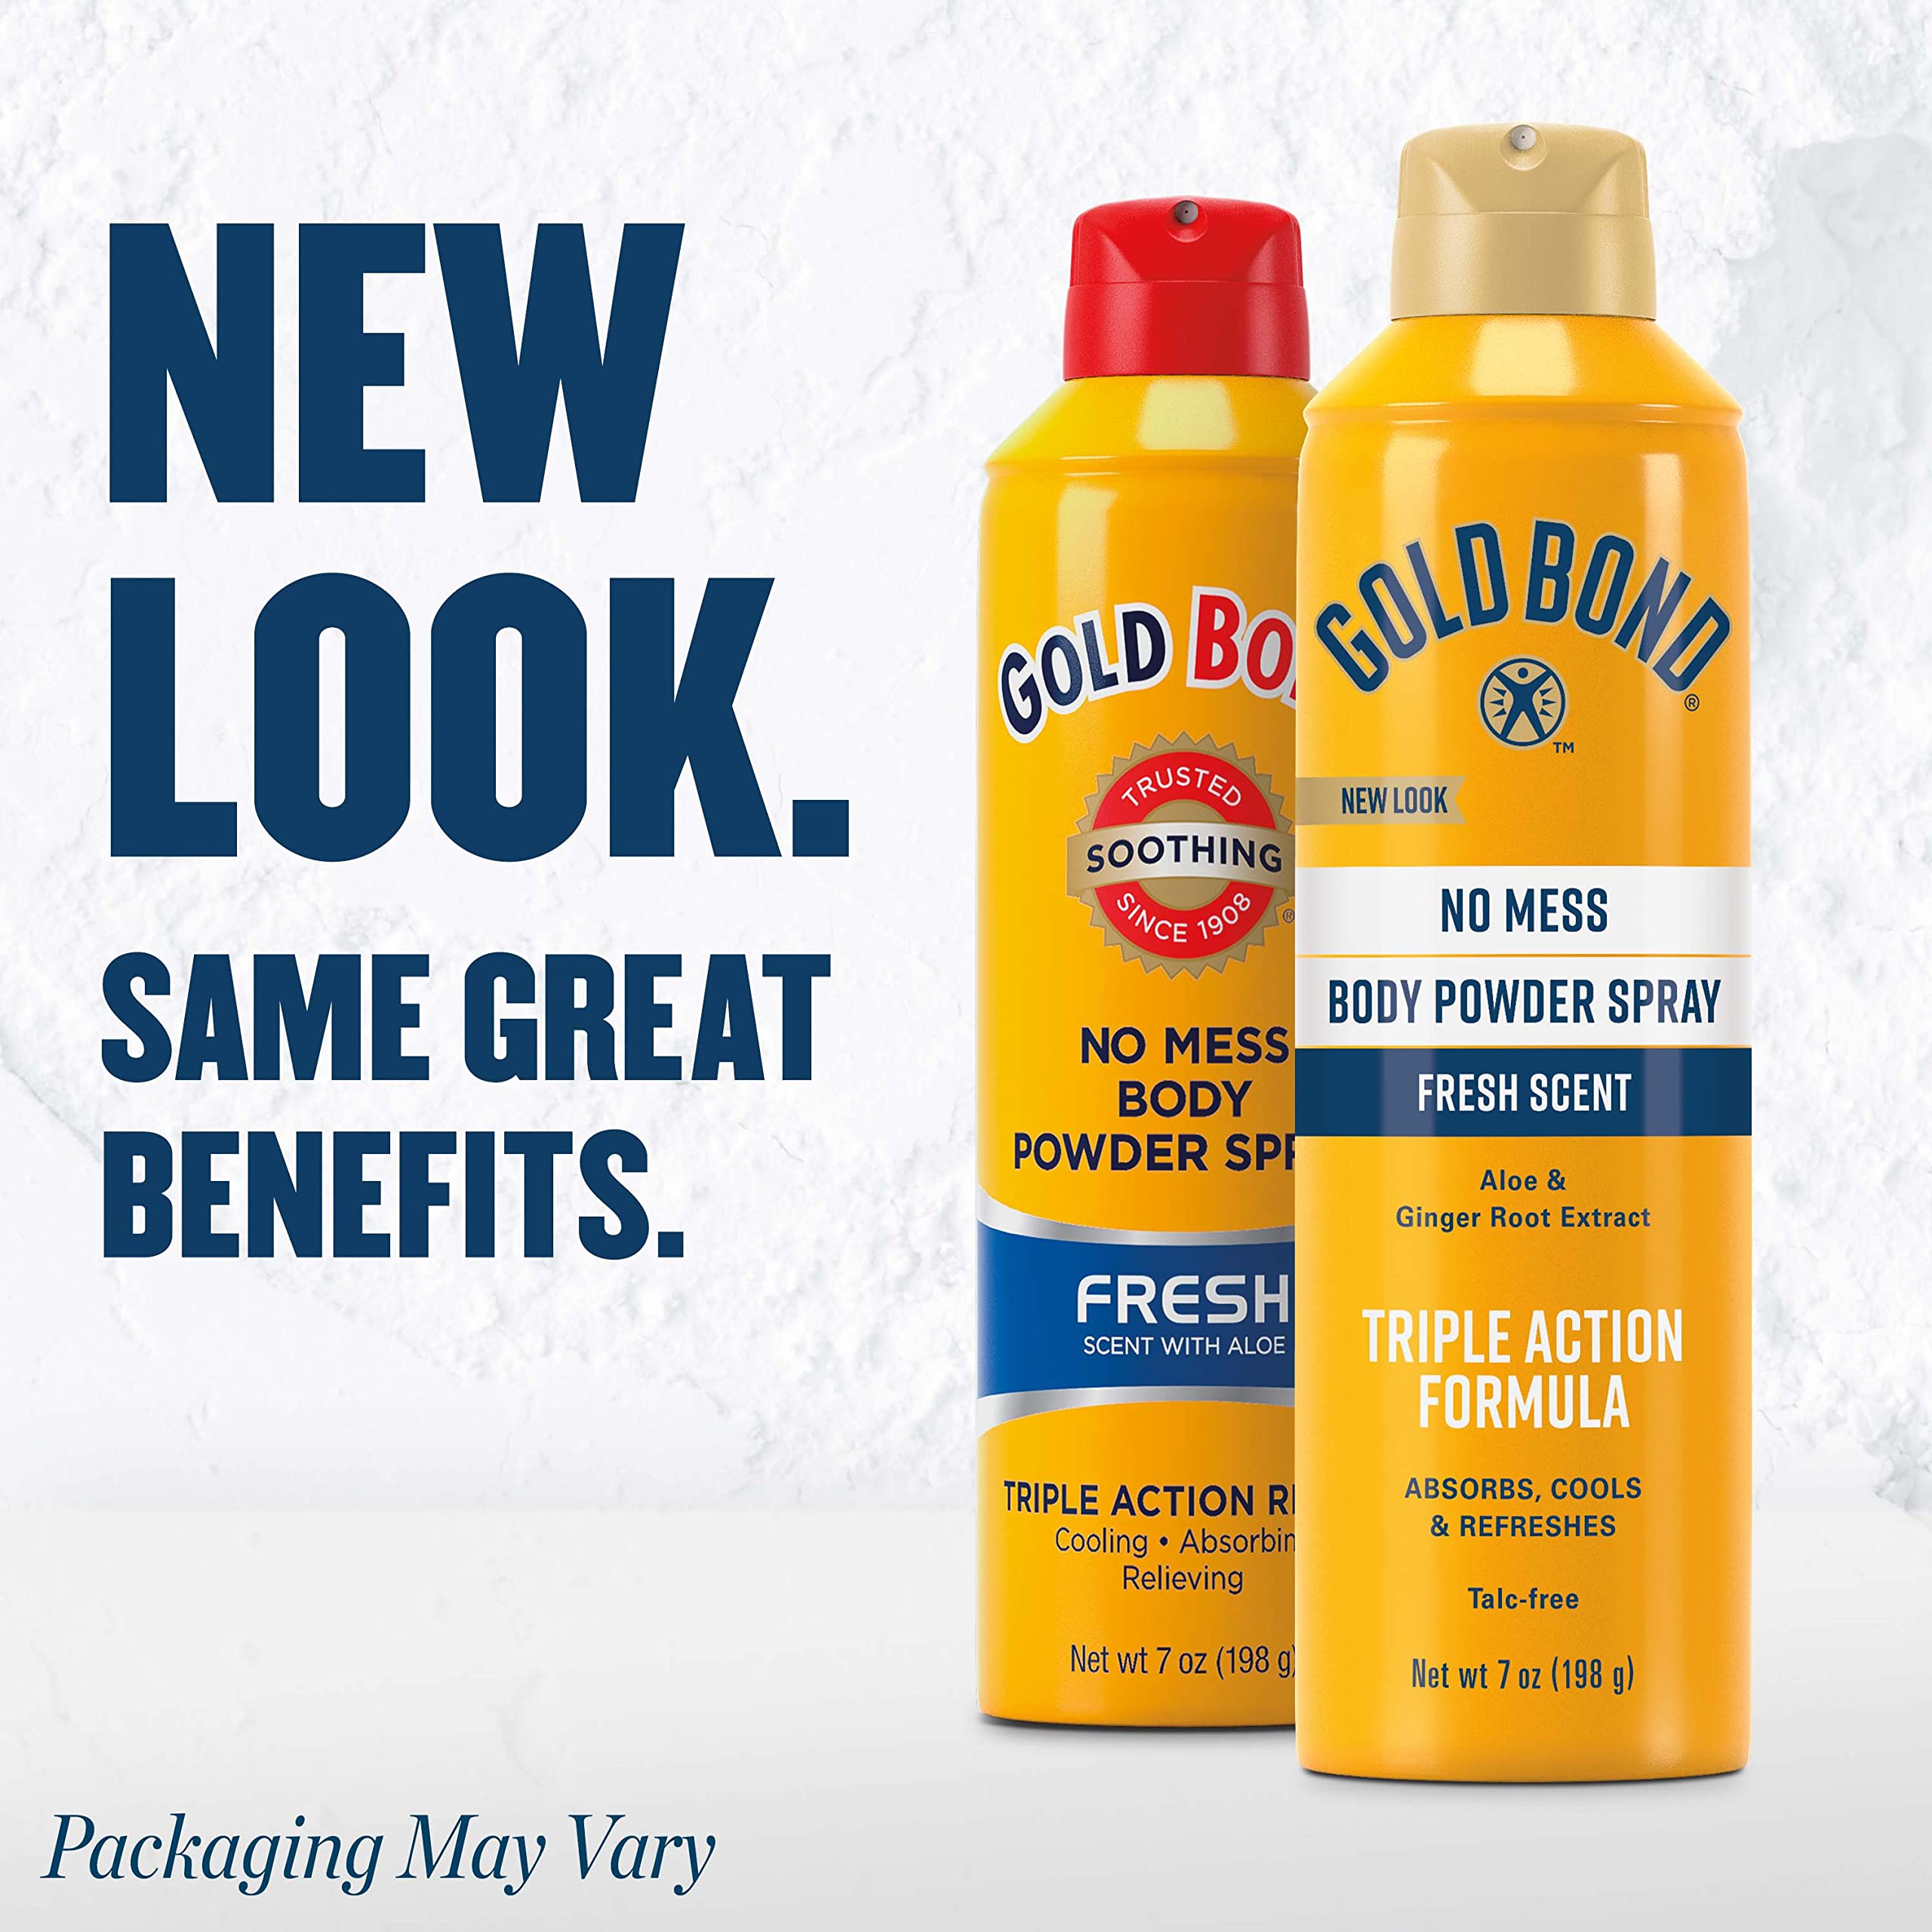 Gold Bond No Mess Talc-Free Body Powder Spray, 7 oz., Fresh Scent, With a Triple Action Formula